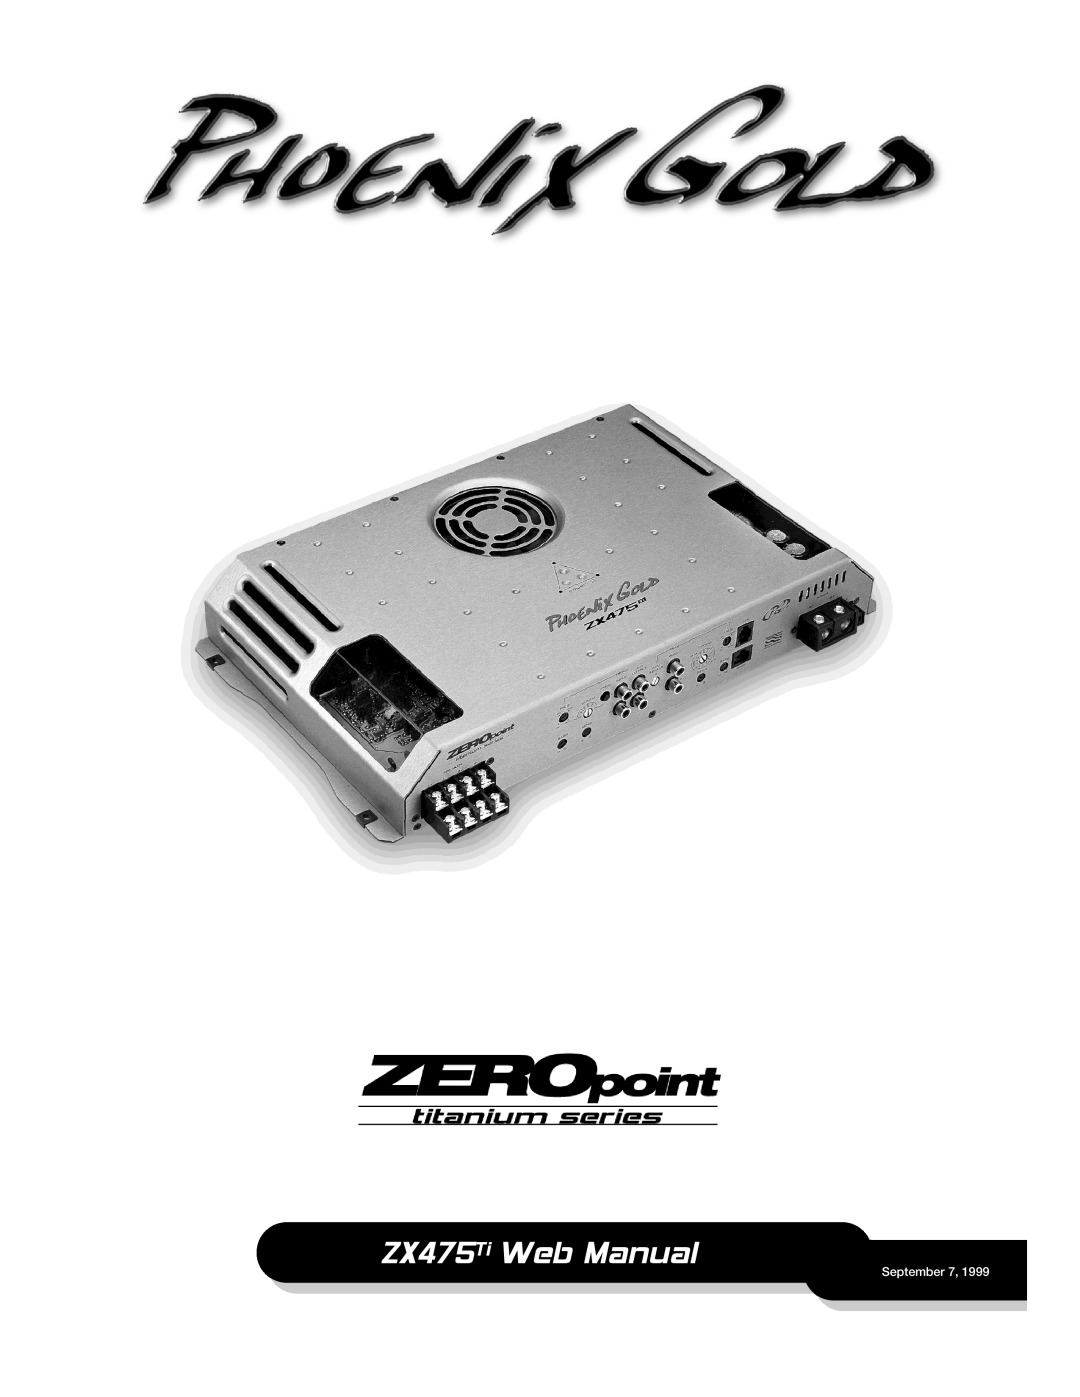 Phoenix Gold manual ZX475Ti Web Manual, September 